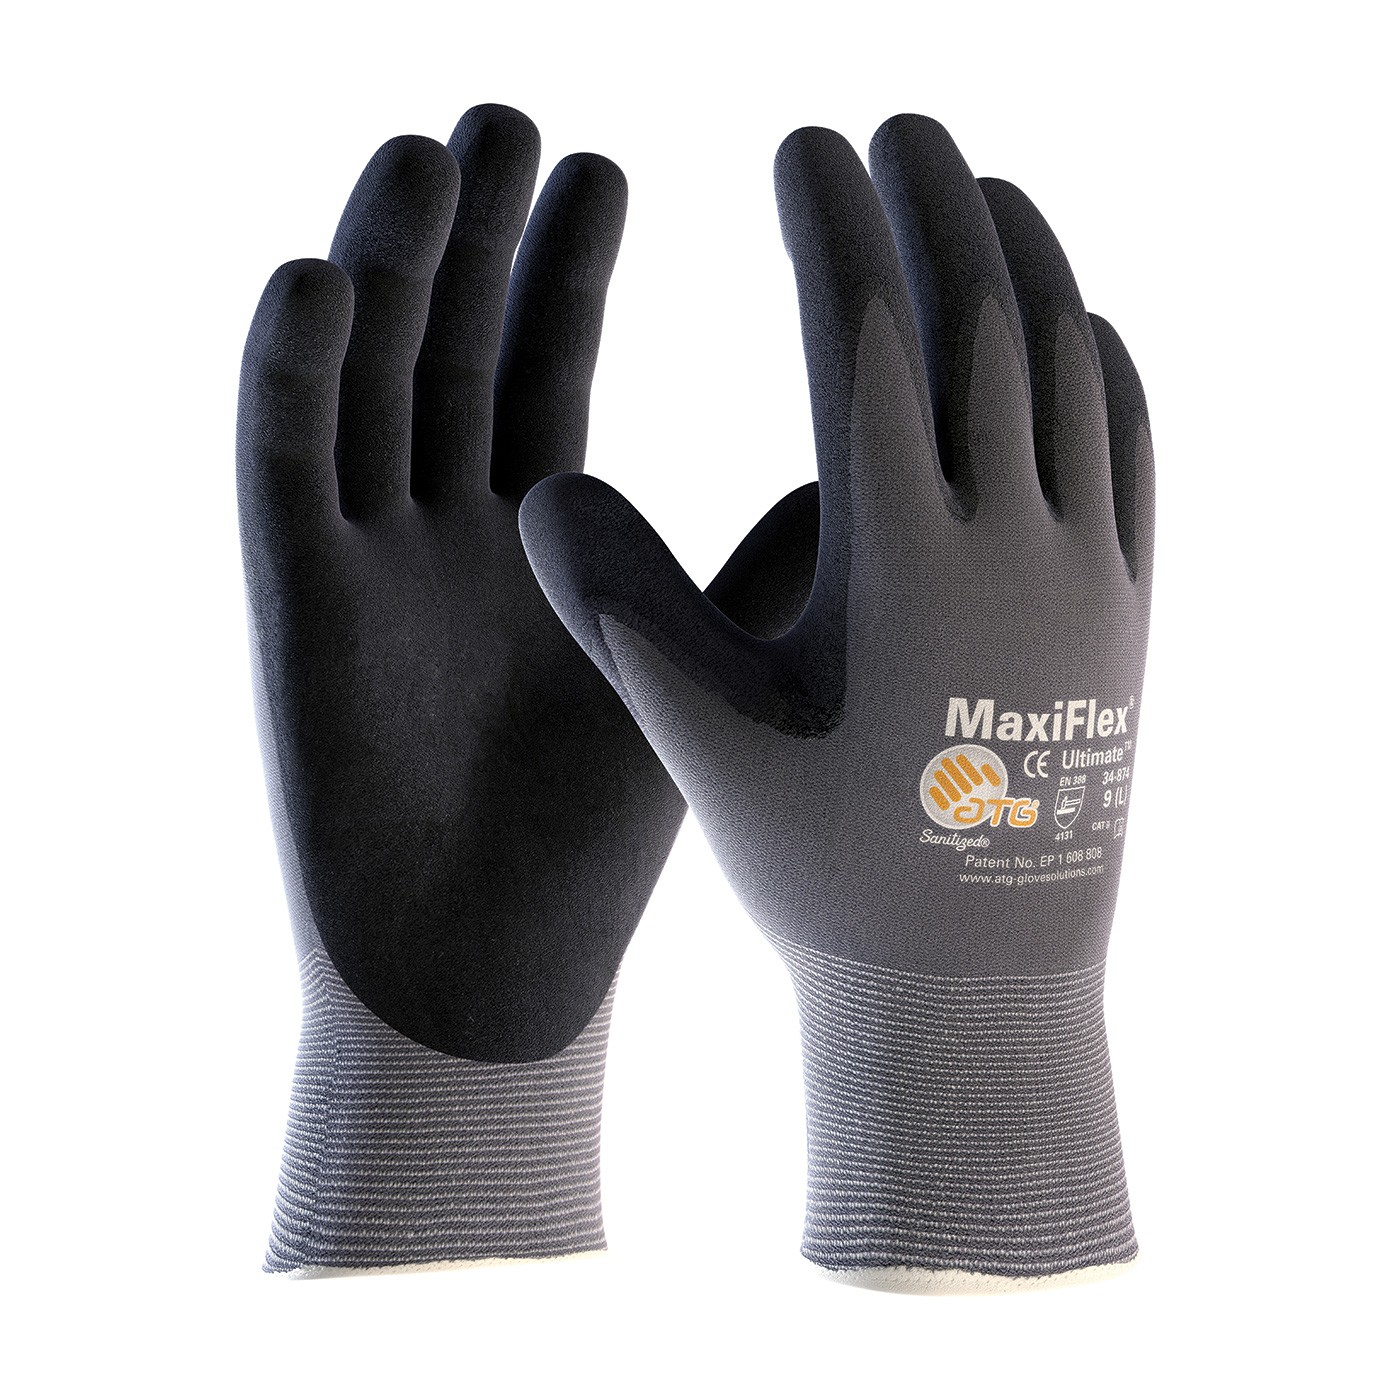 MaxiFlex Ultimate 34-874 MicroFoam Nitrile Coated Grip Work Gloves (Pack of 12 Pairs)